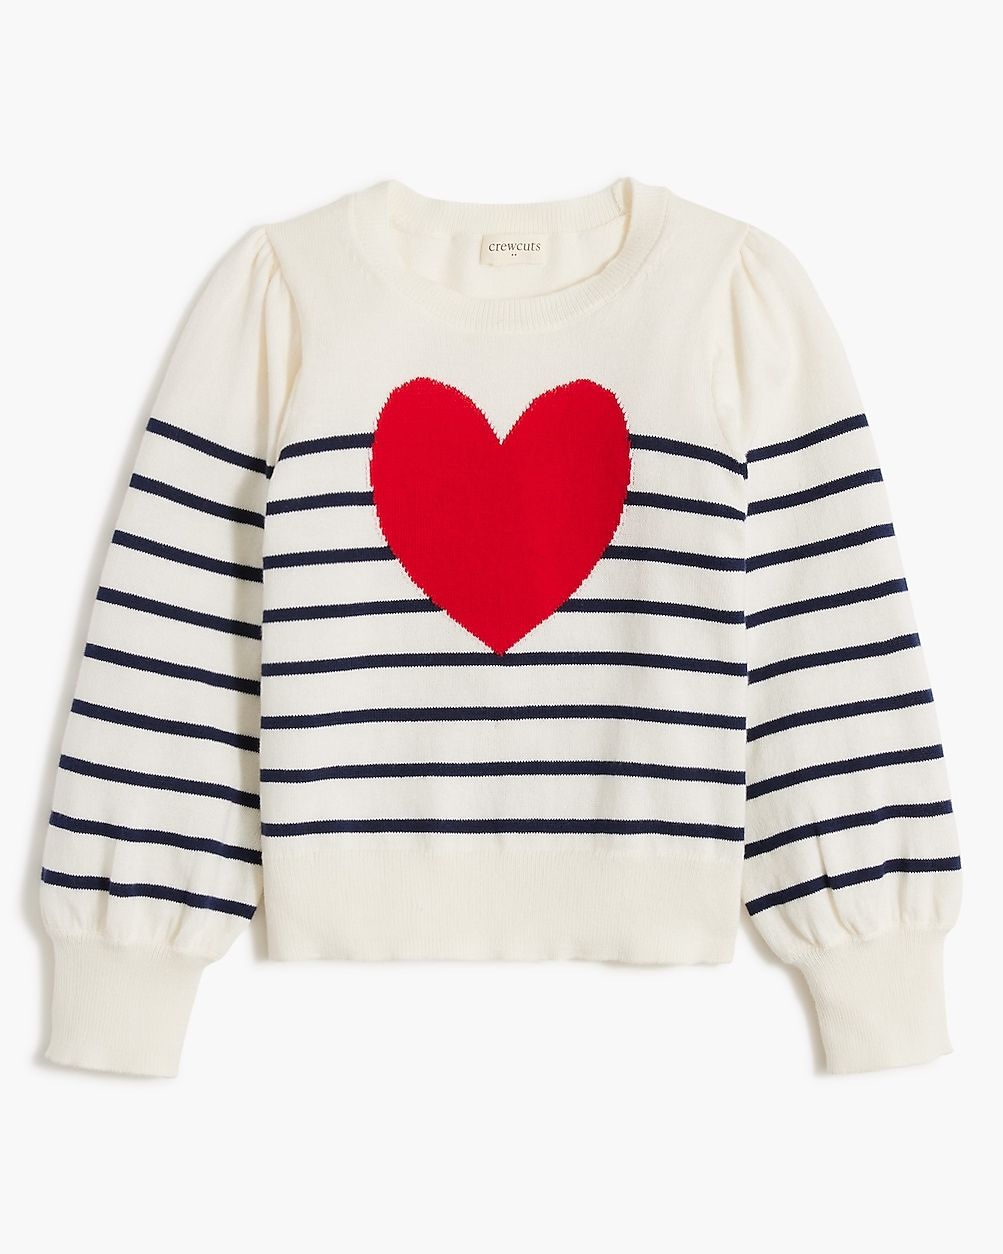 Girls' striped heart sweater | J.Crew Factory